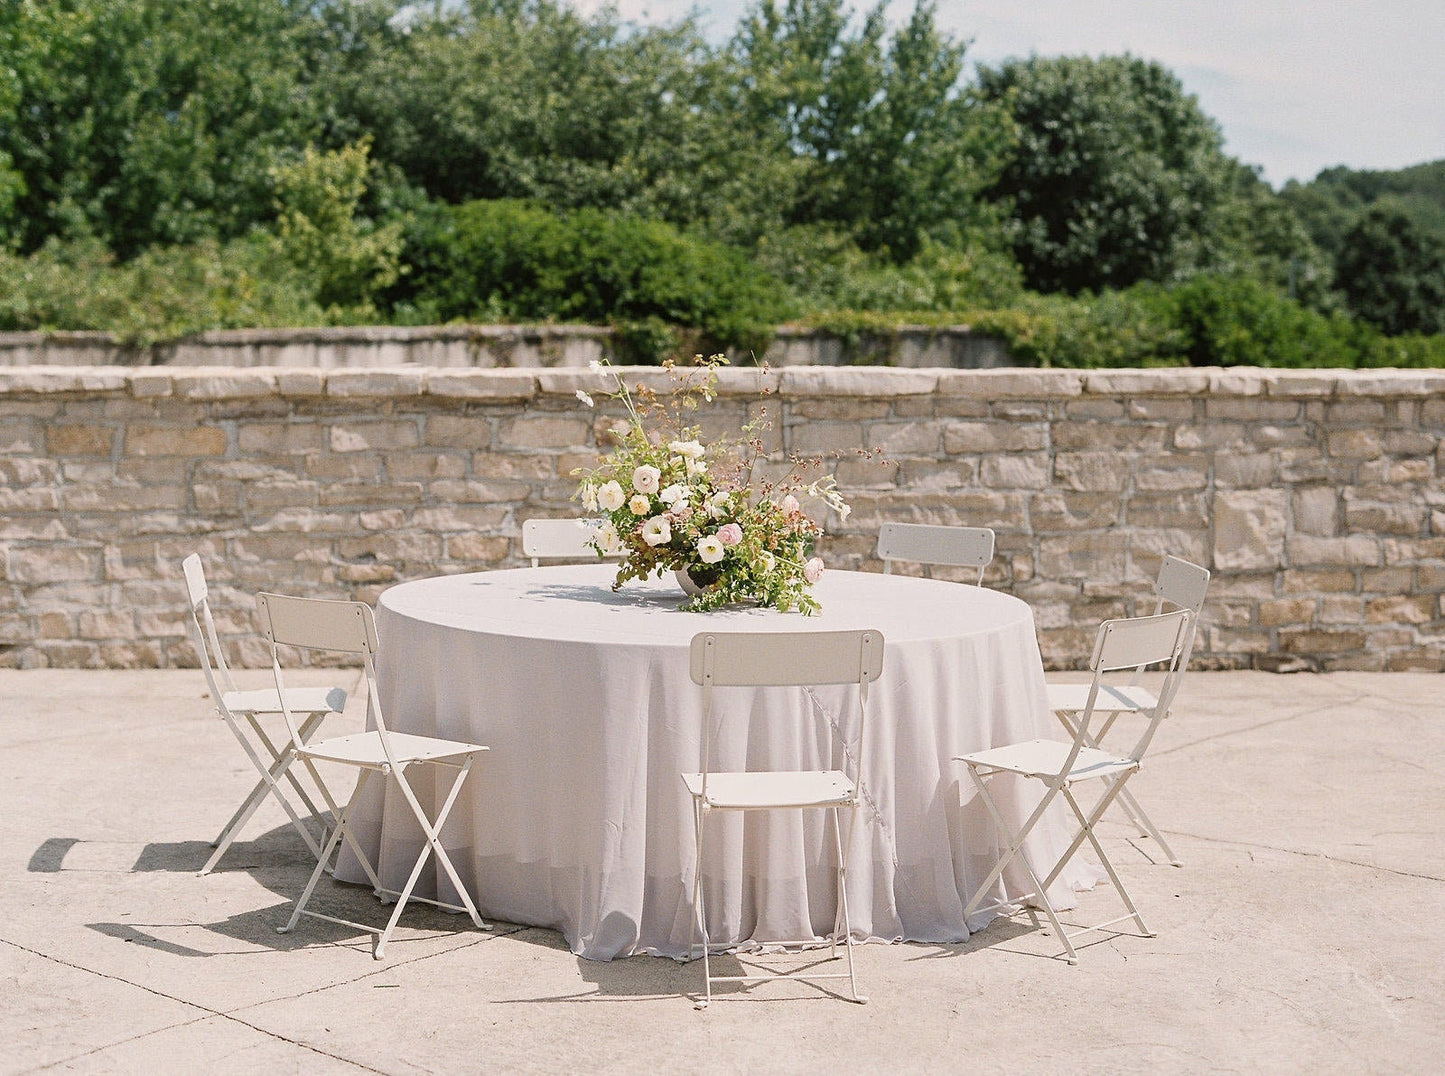 Romantic Chiffon Table Overlay